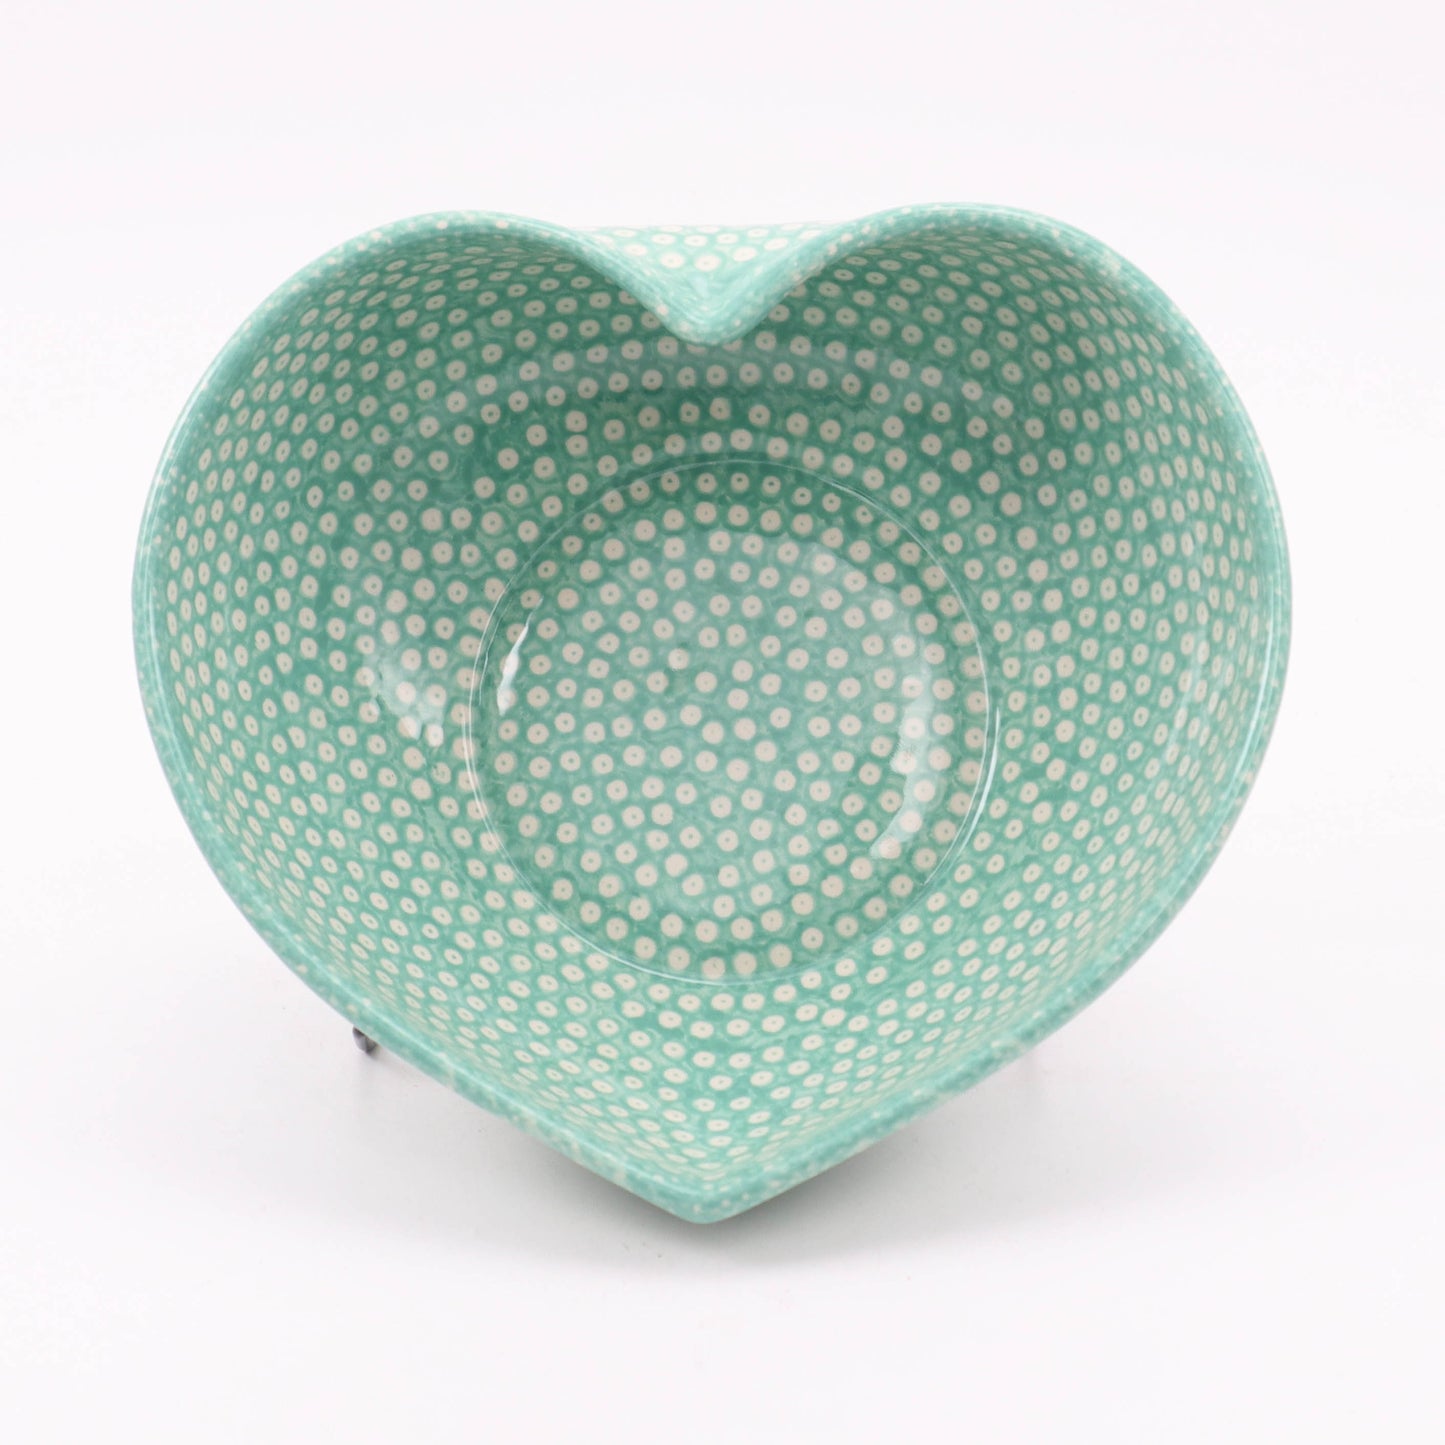 8"x8.5" Heart Bowl. Pattern: Mint